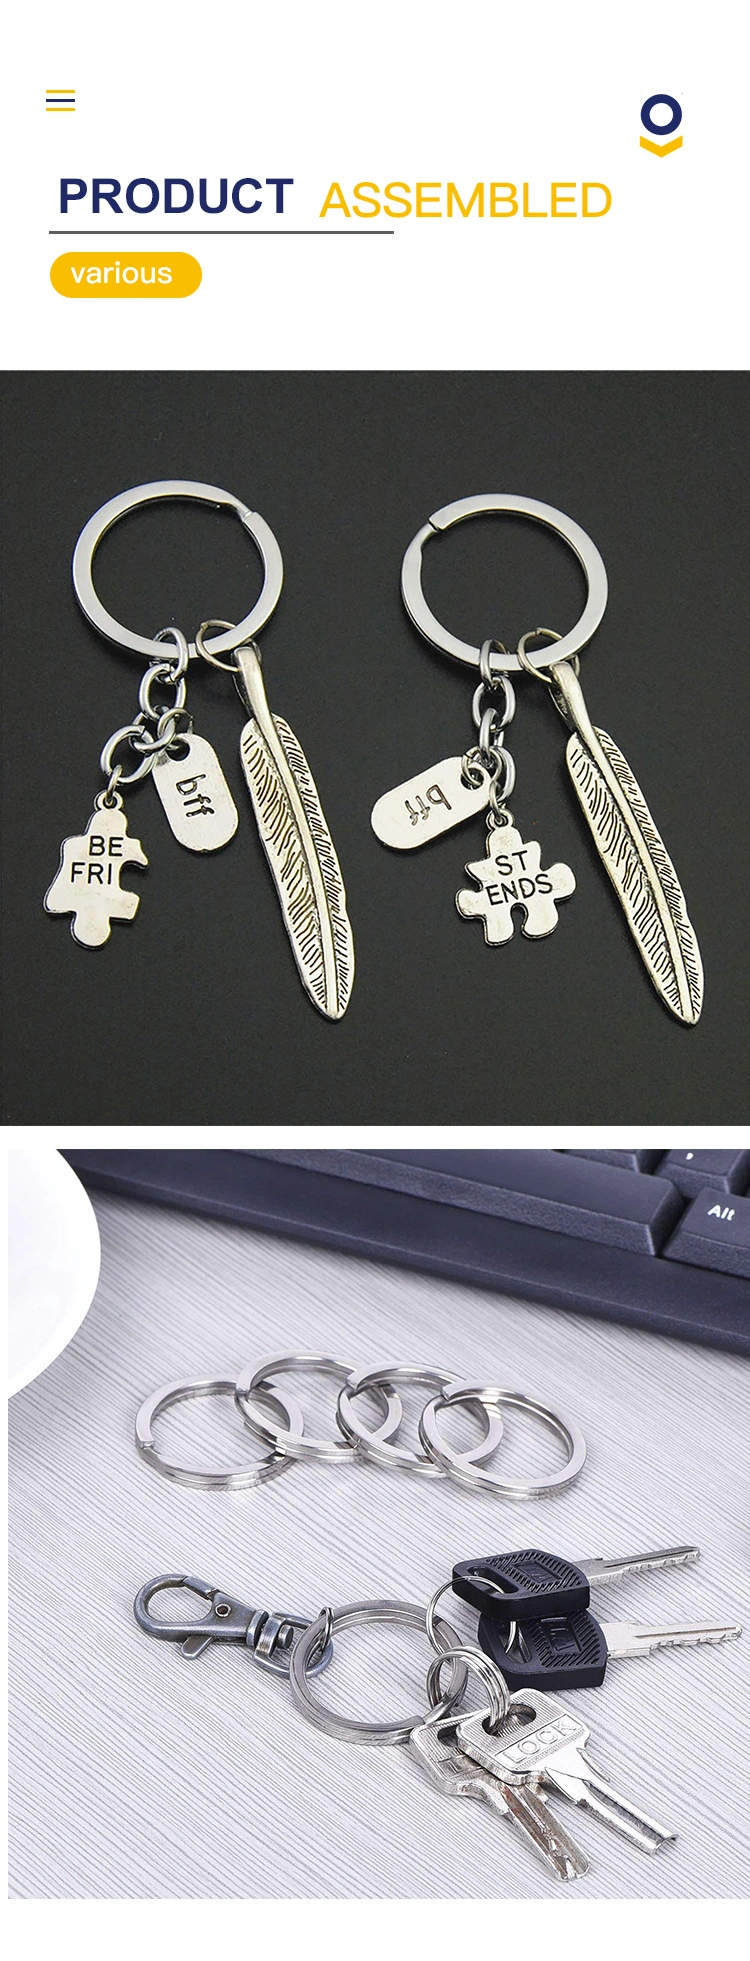 Silver Gold Split Key Ring Circle, Metal Flat Key Chain Rings for Dog Tag DIY Jewelry Car Key Attachment